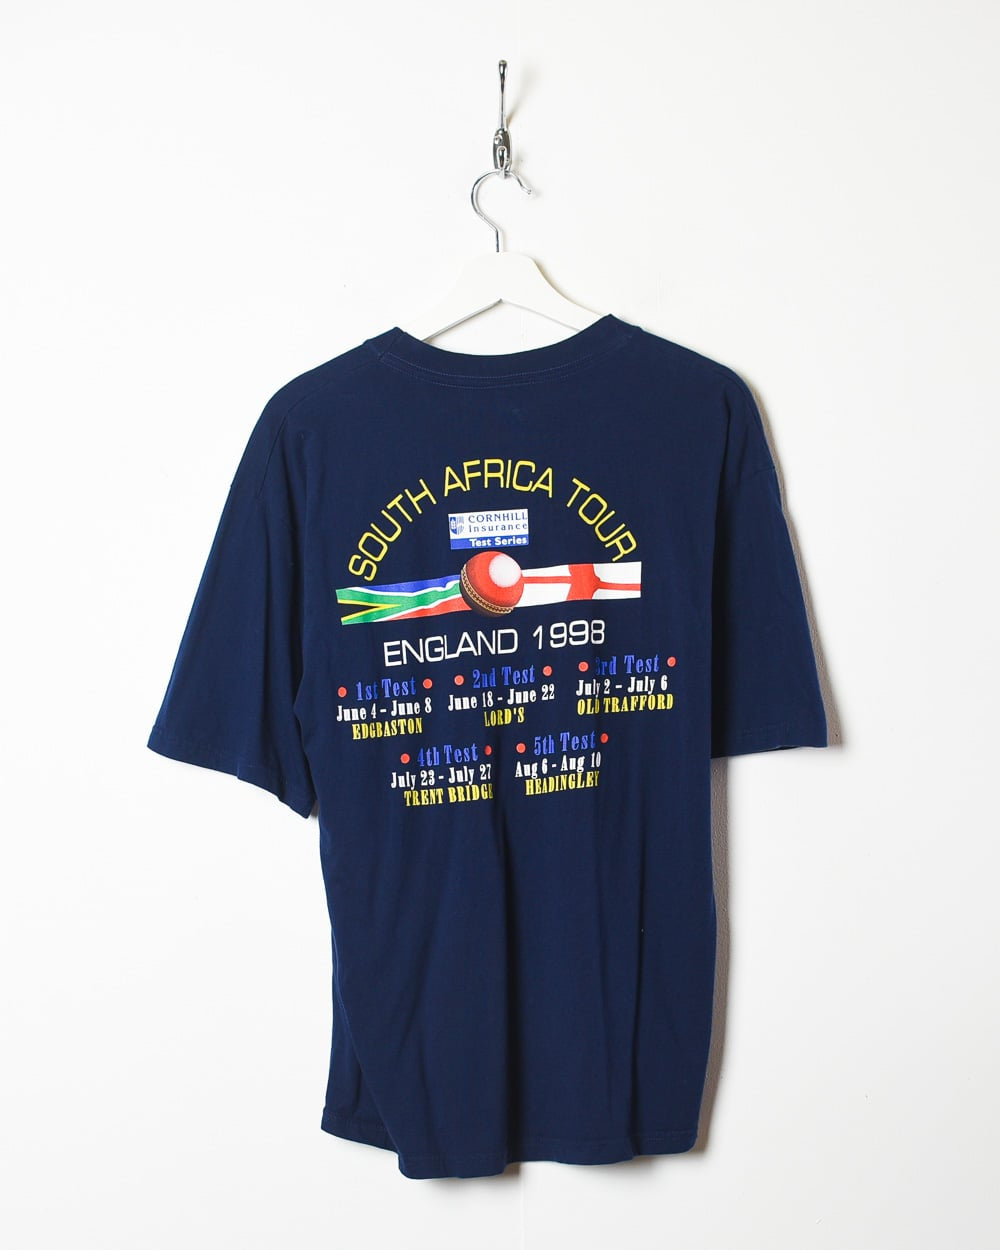 Navy ECB South Africa Tour England 1998 Graphic T-Shirt - Medium